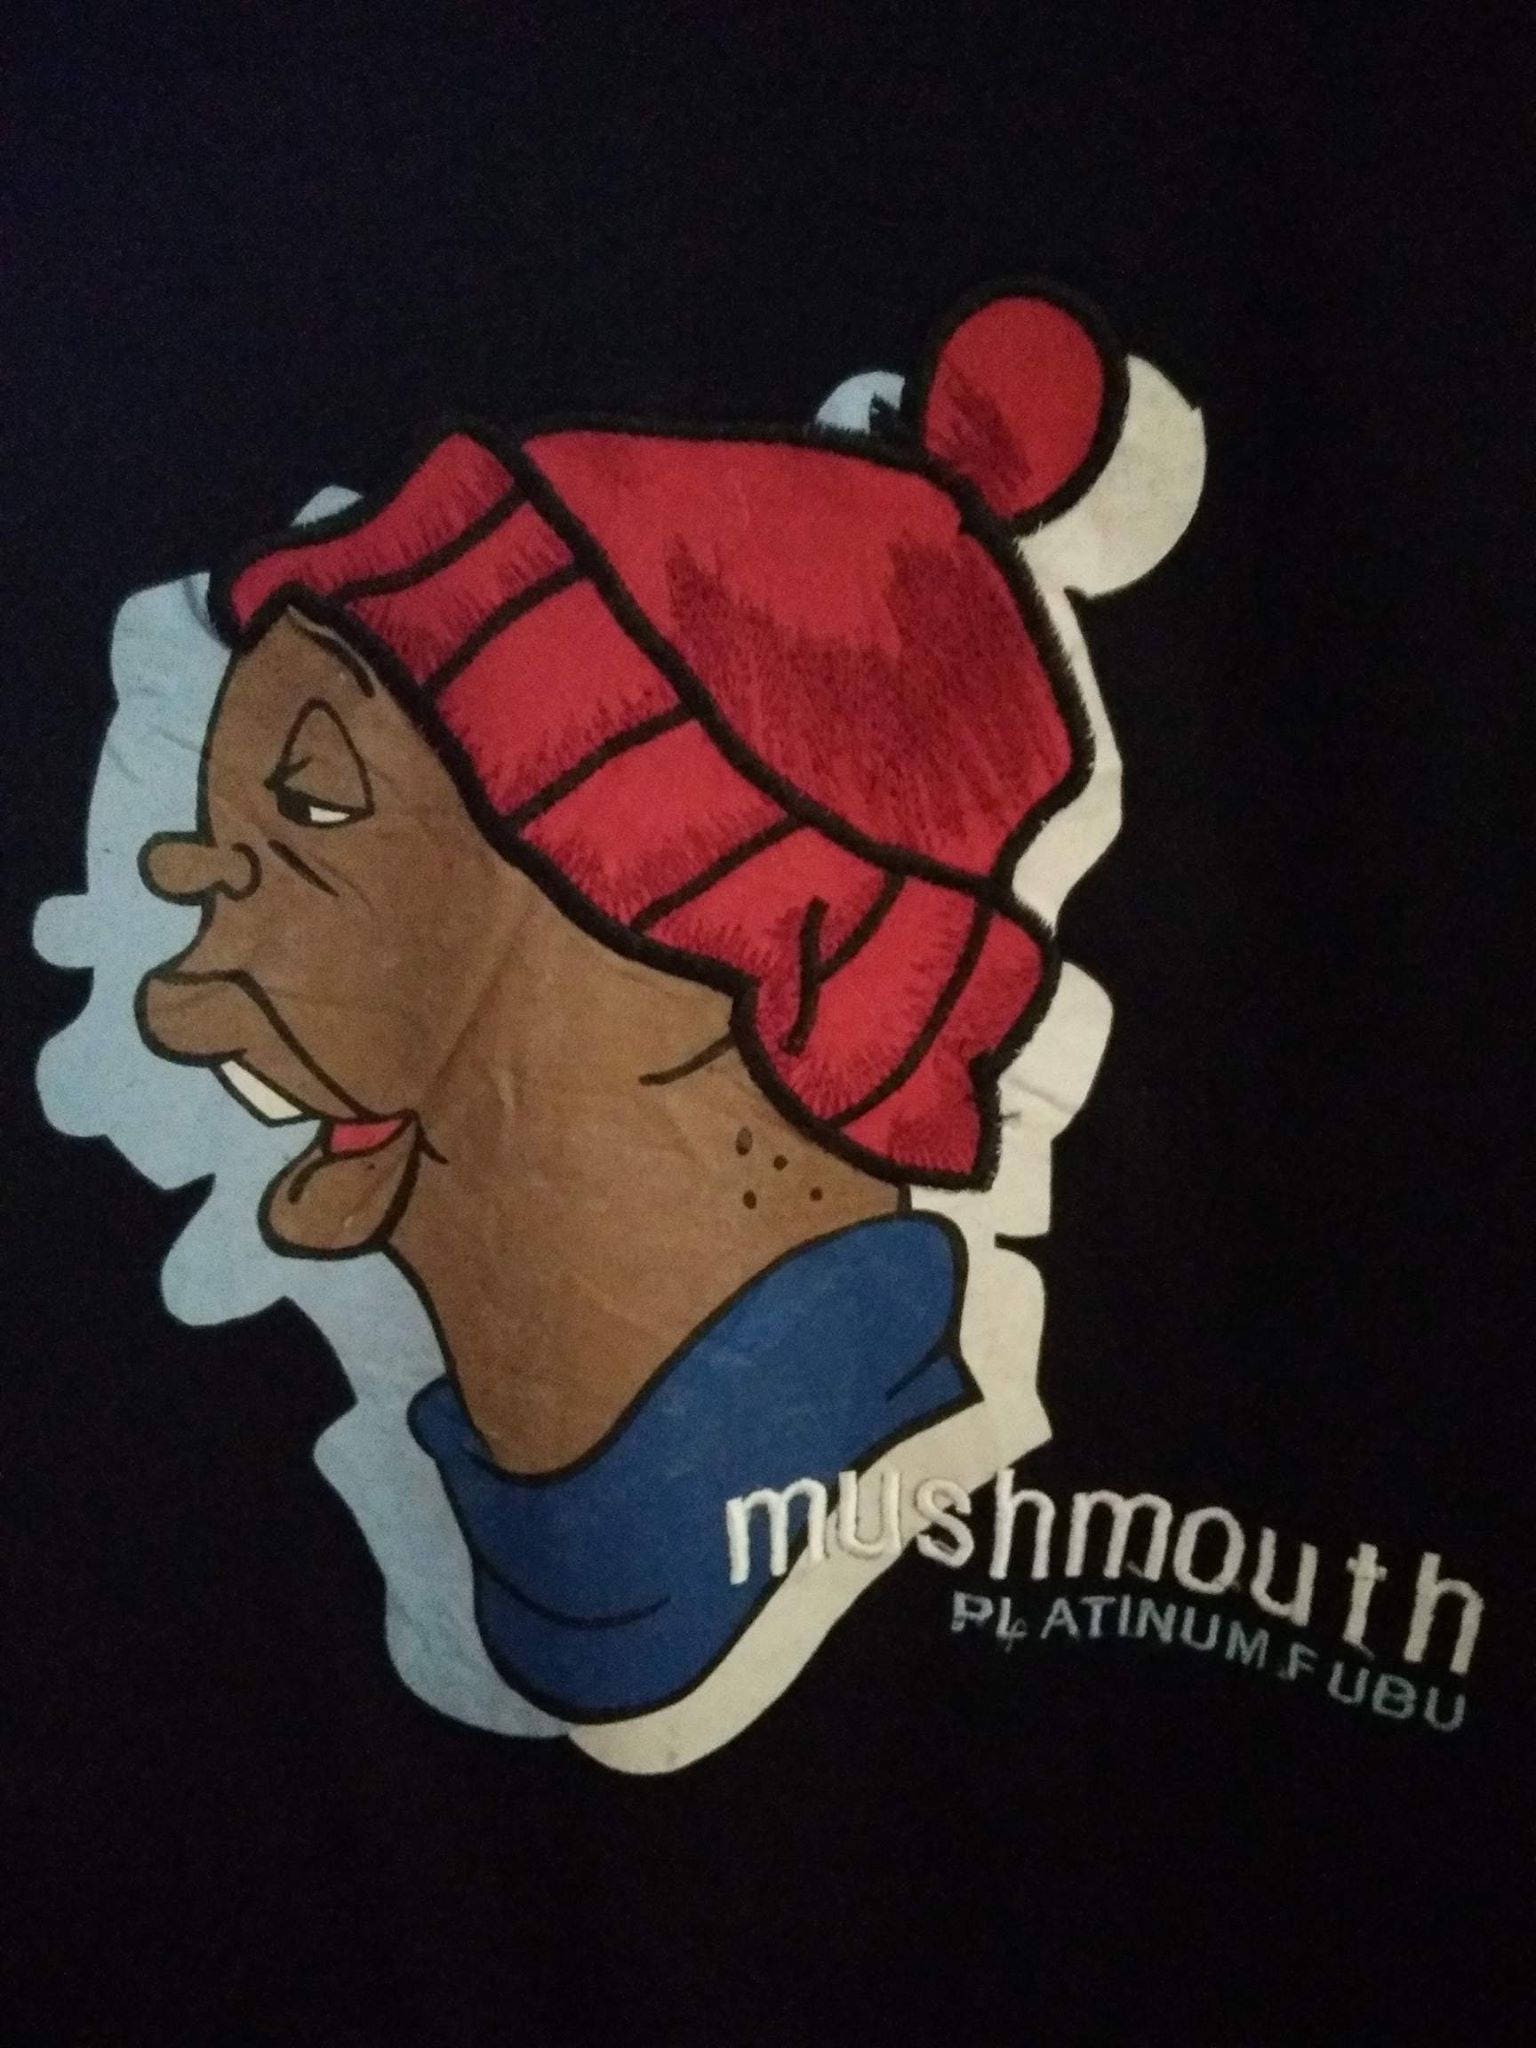 Sale Vintage Mushmouth Platinum Fubu rare Embroided T shirt